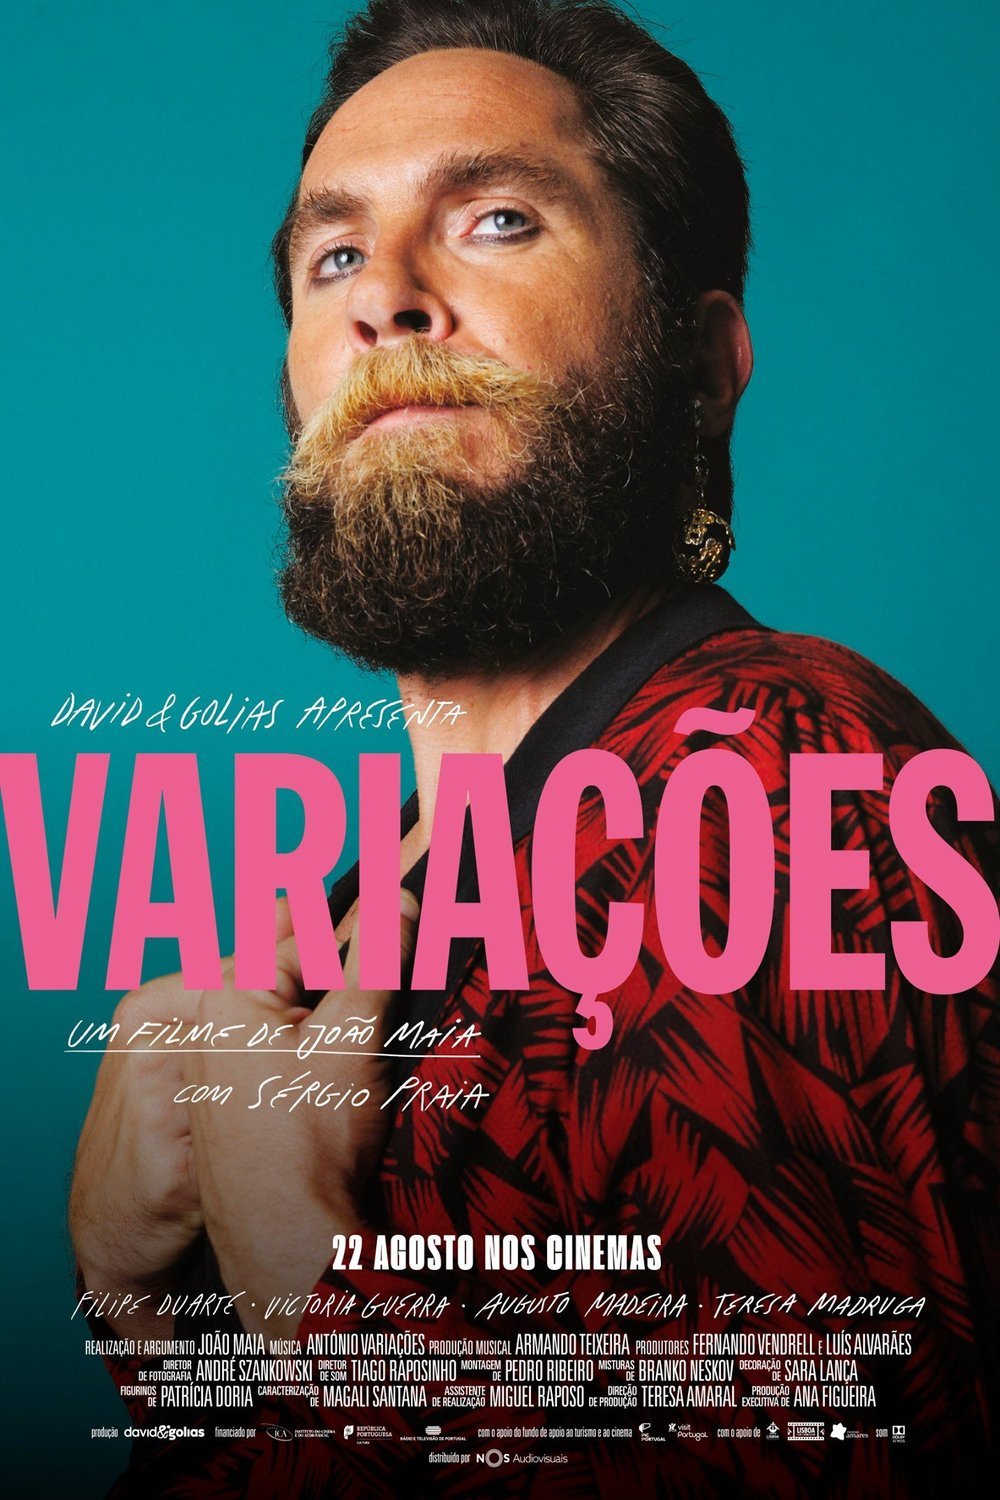 Portuguese poster of the movie Variações: Guardian Angel